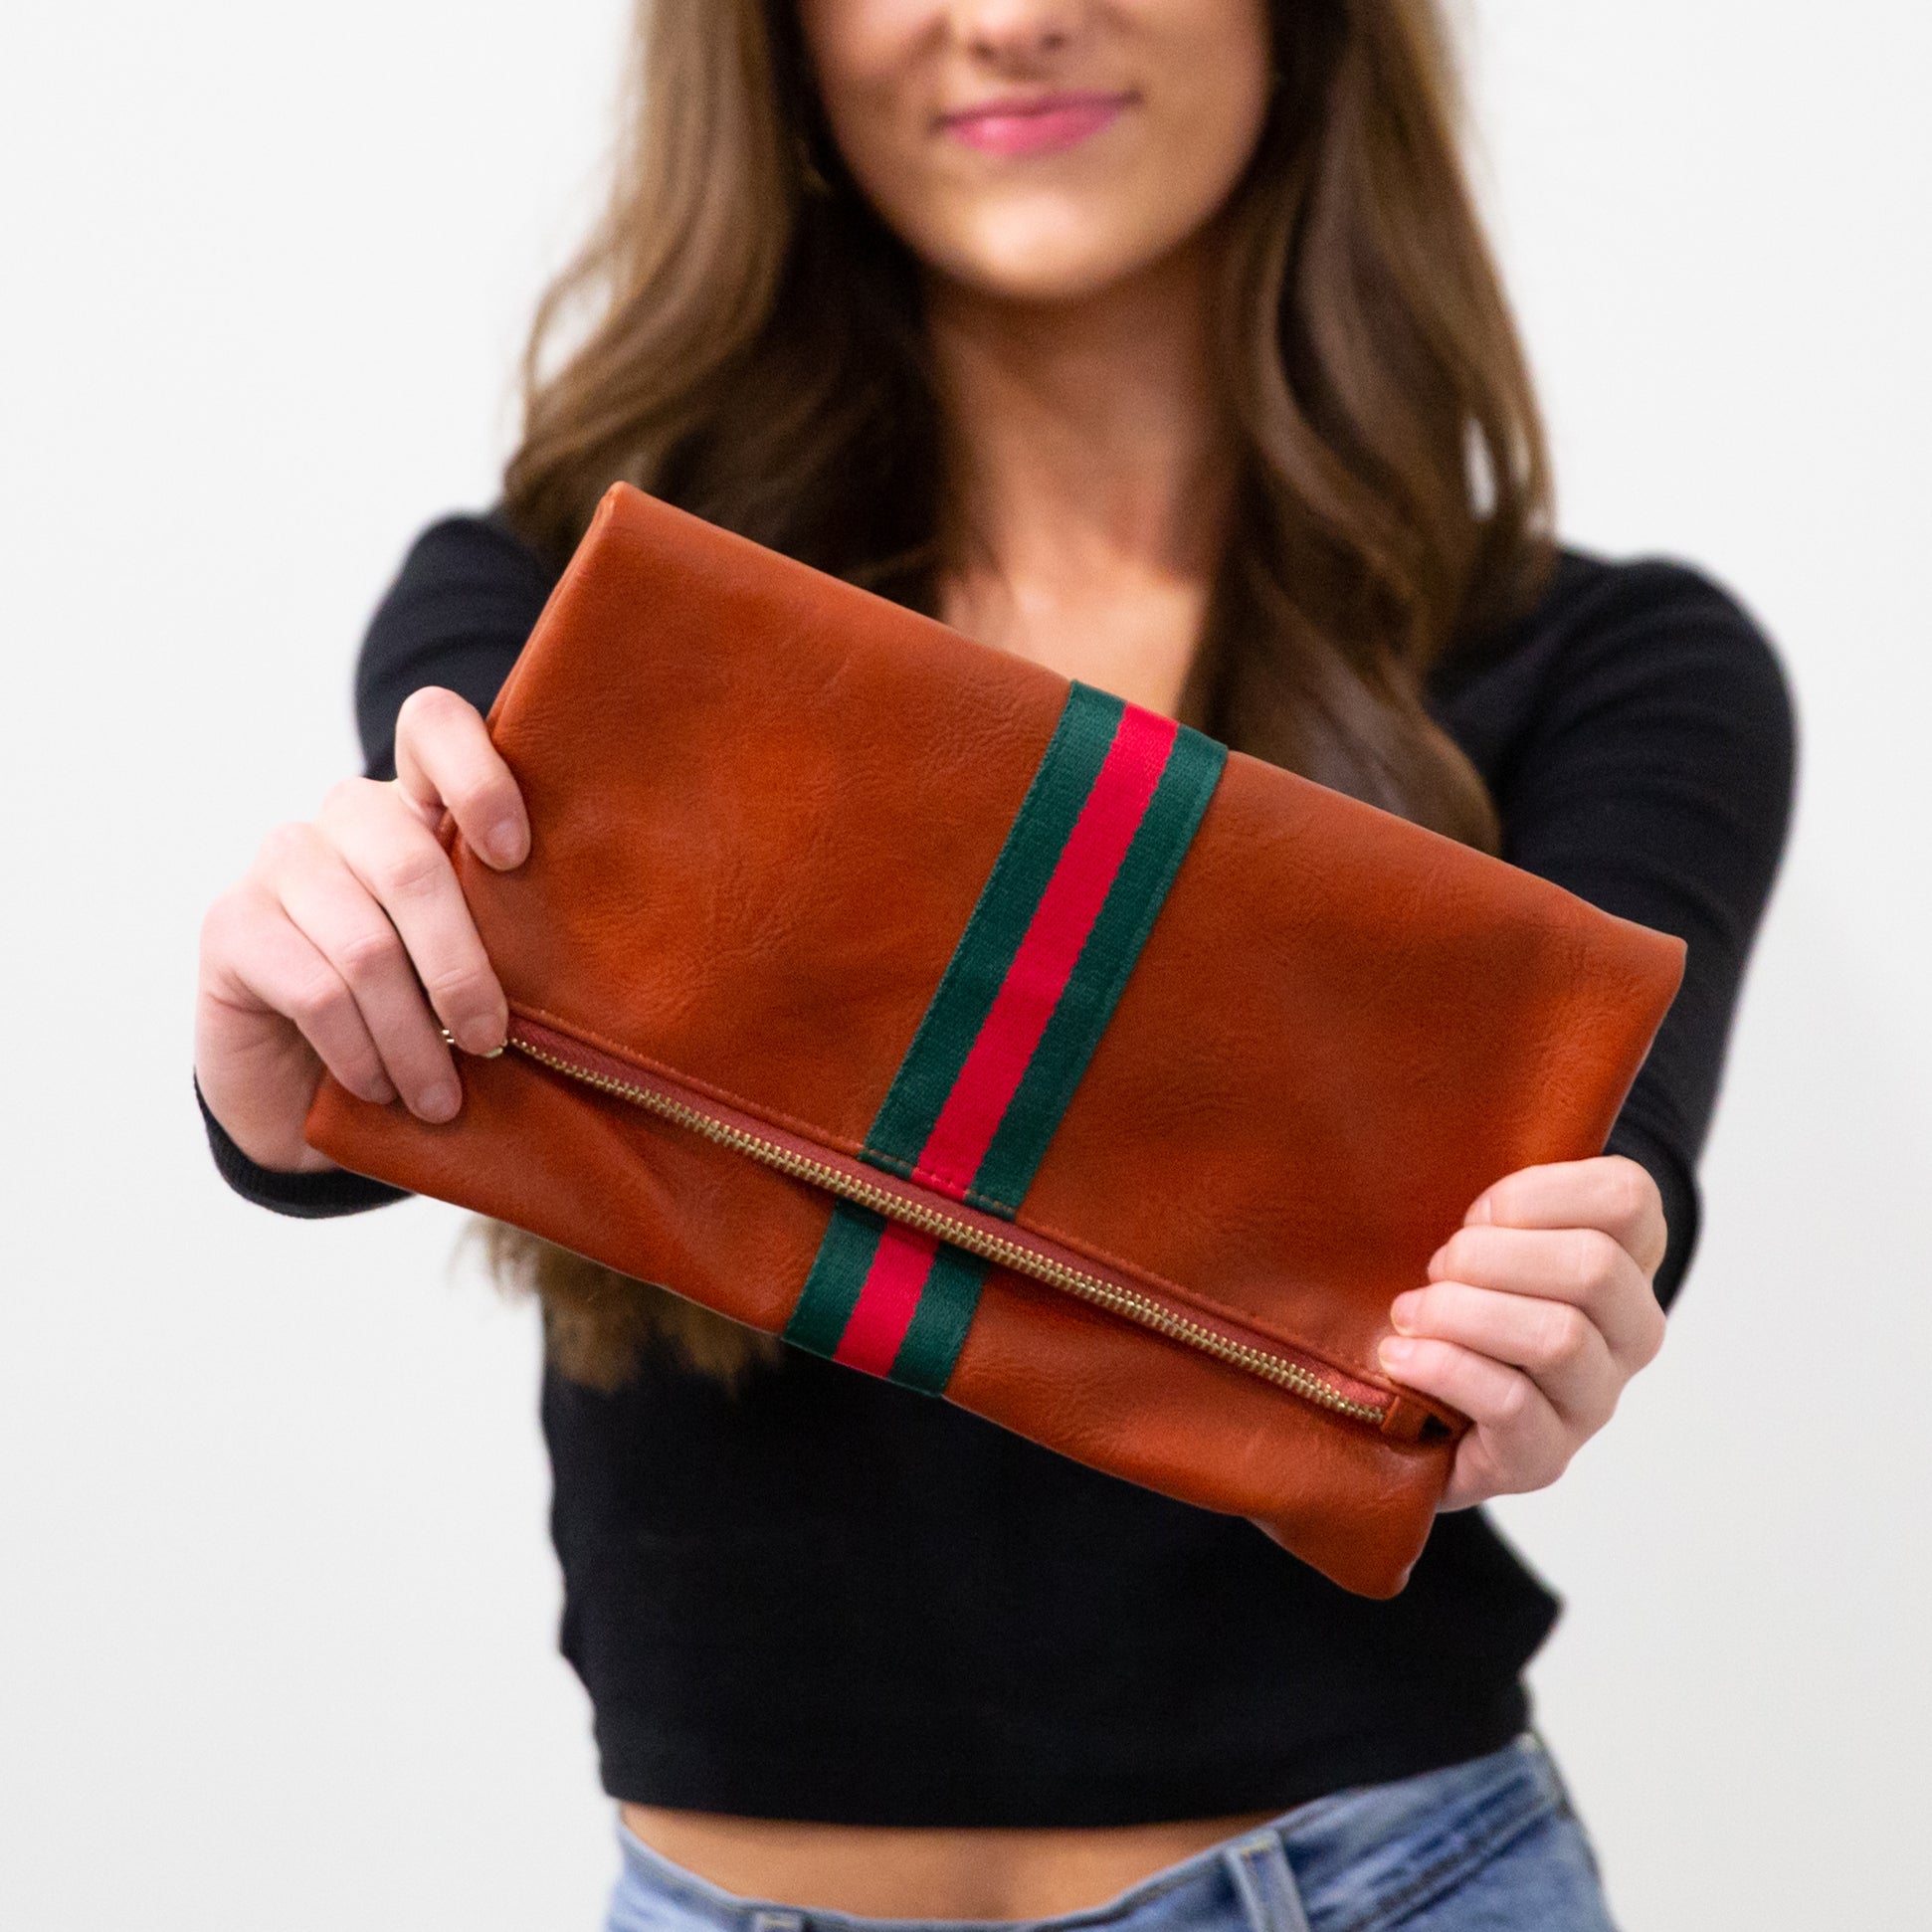 Patricia Nash Wristlet Purse Fold Over Leather Travel Purse Bag | eBay